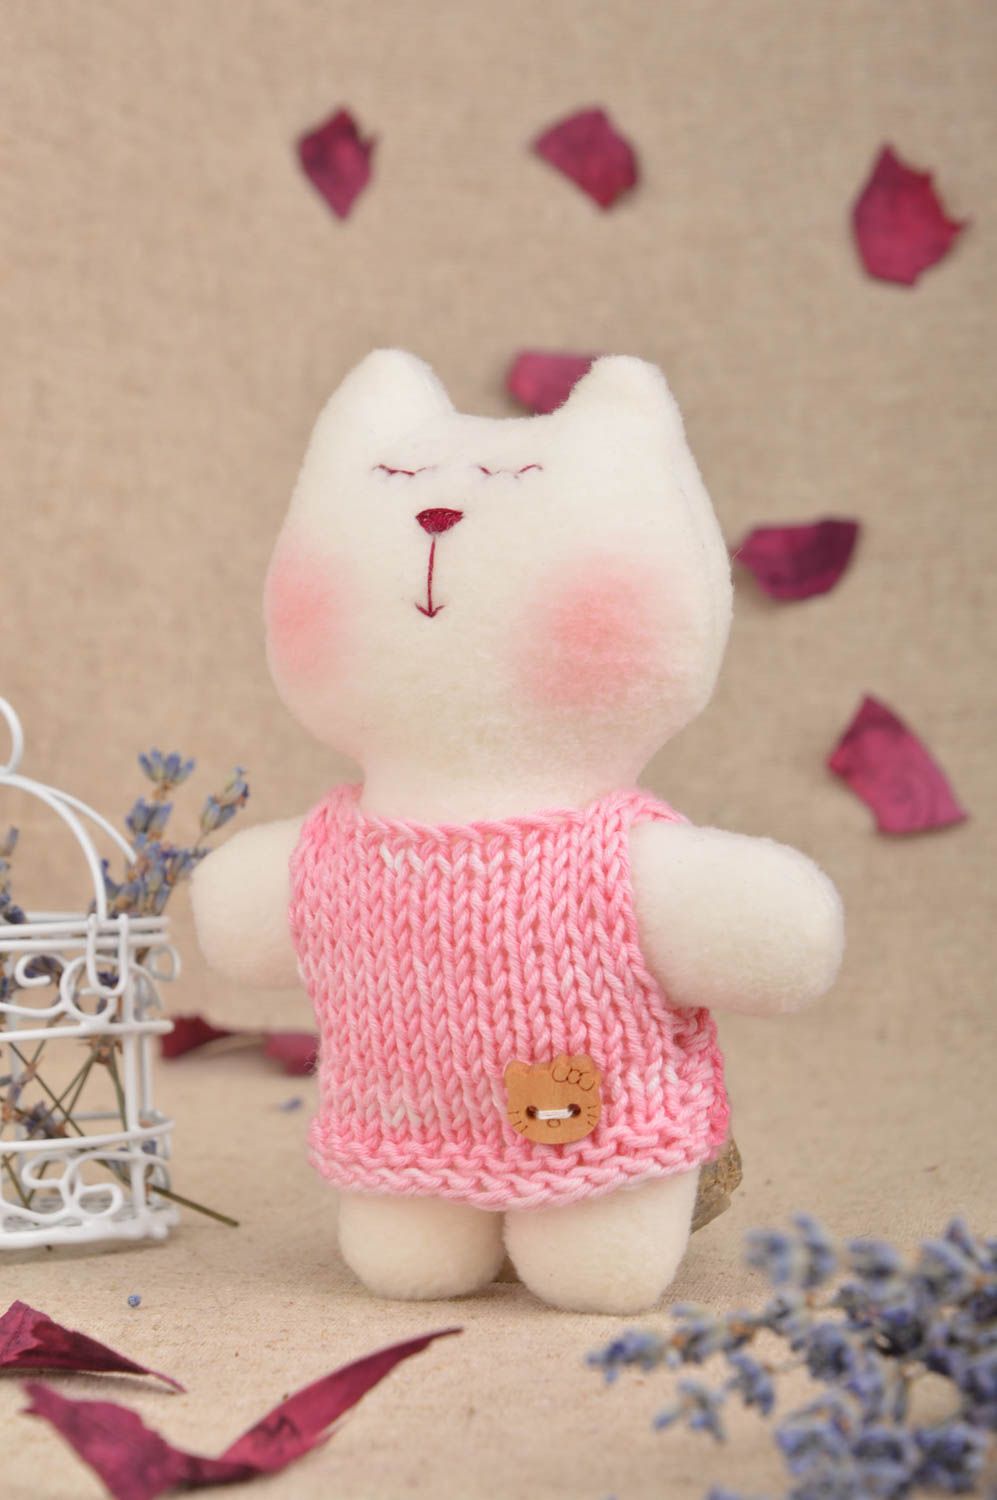 Beautiful handmade fleece fabric soft toy lovely stuffed toy for kids gift ideas photo 1